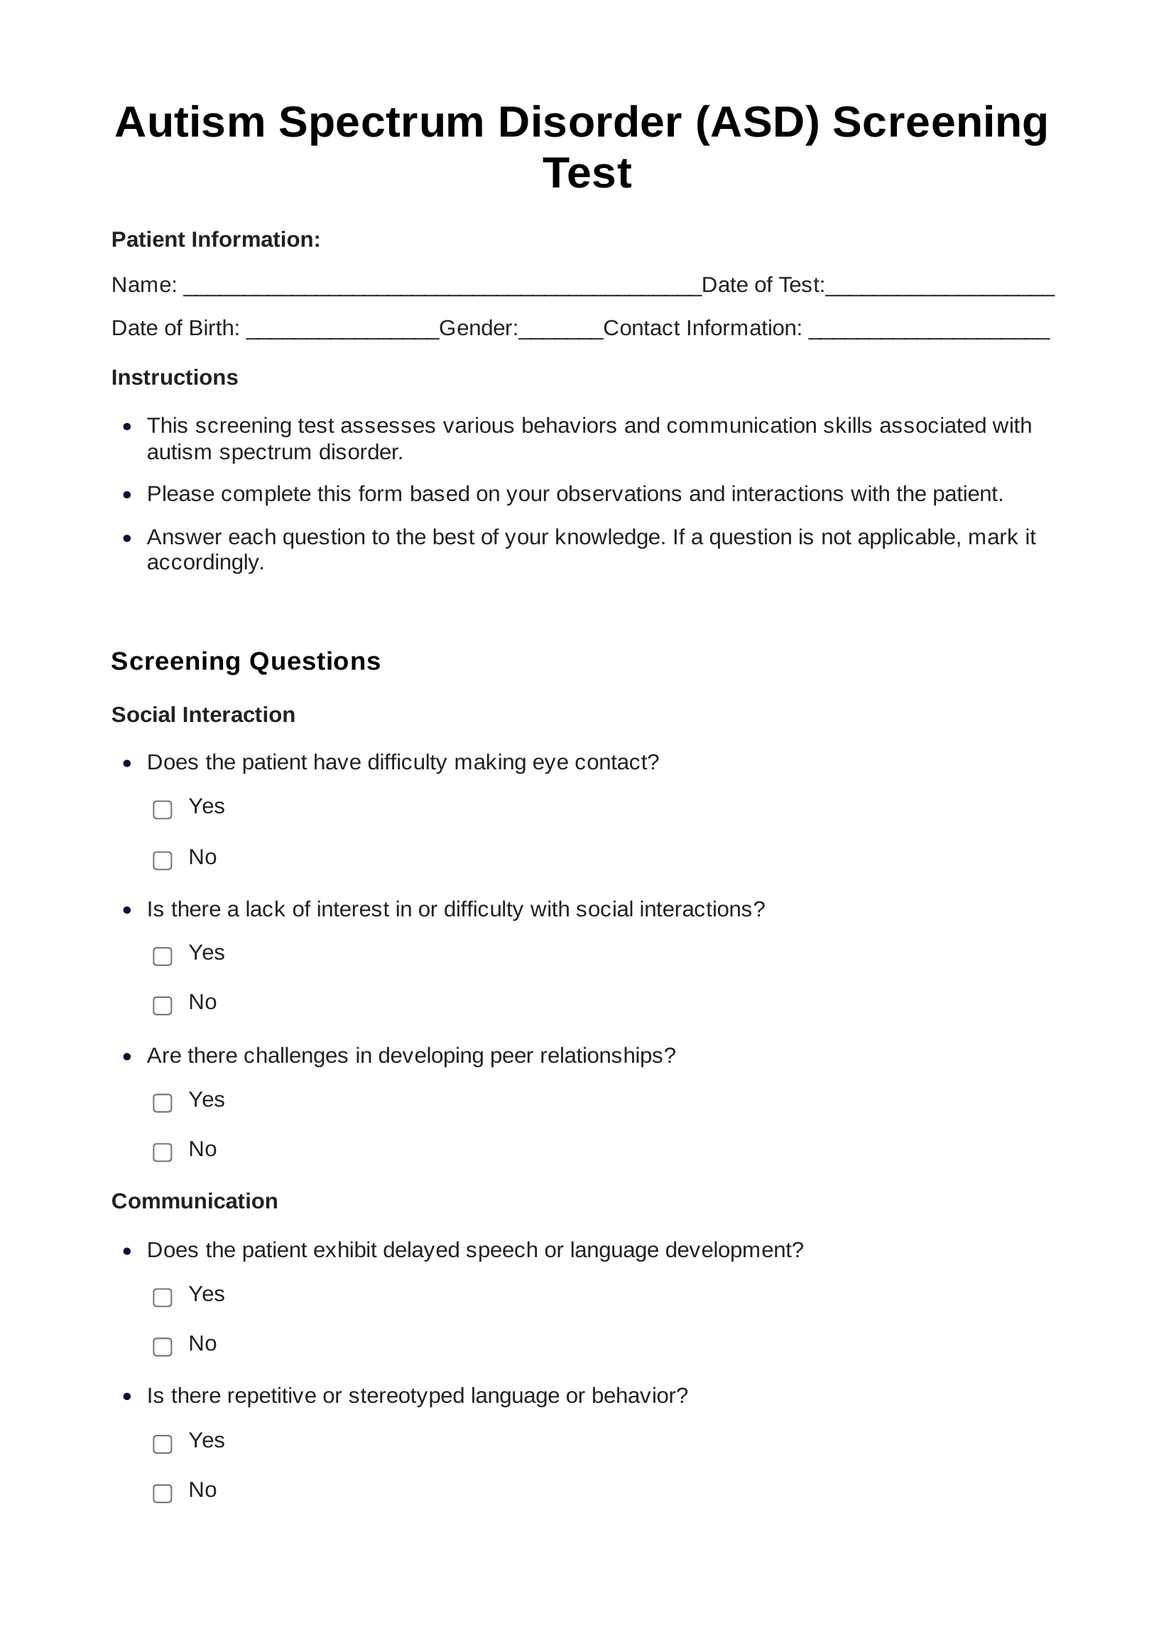 Autism Spectrum Disorder Screening PDF Example